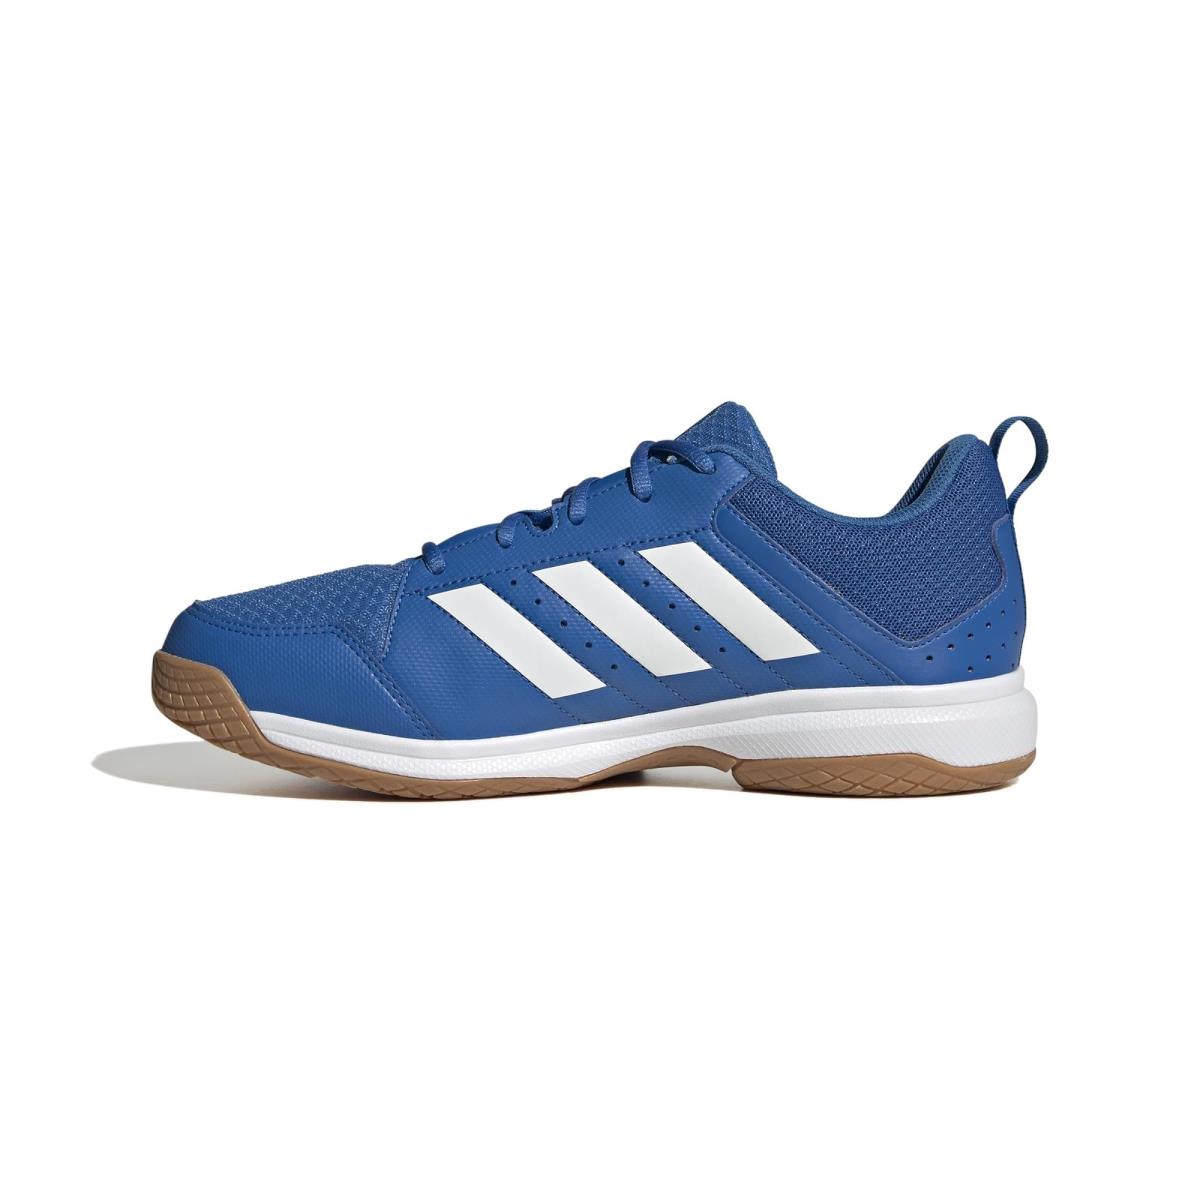 Adidas Men`s Ligra 7 Track and Field Shoe Bright Royal/White/White